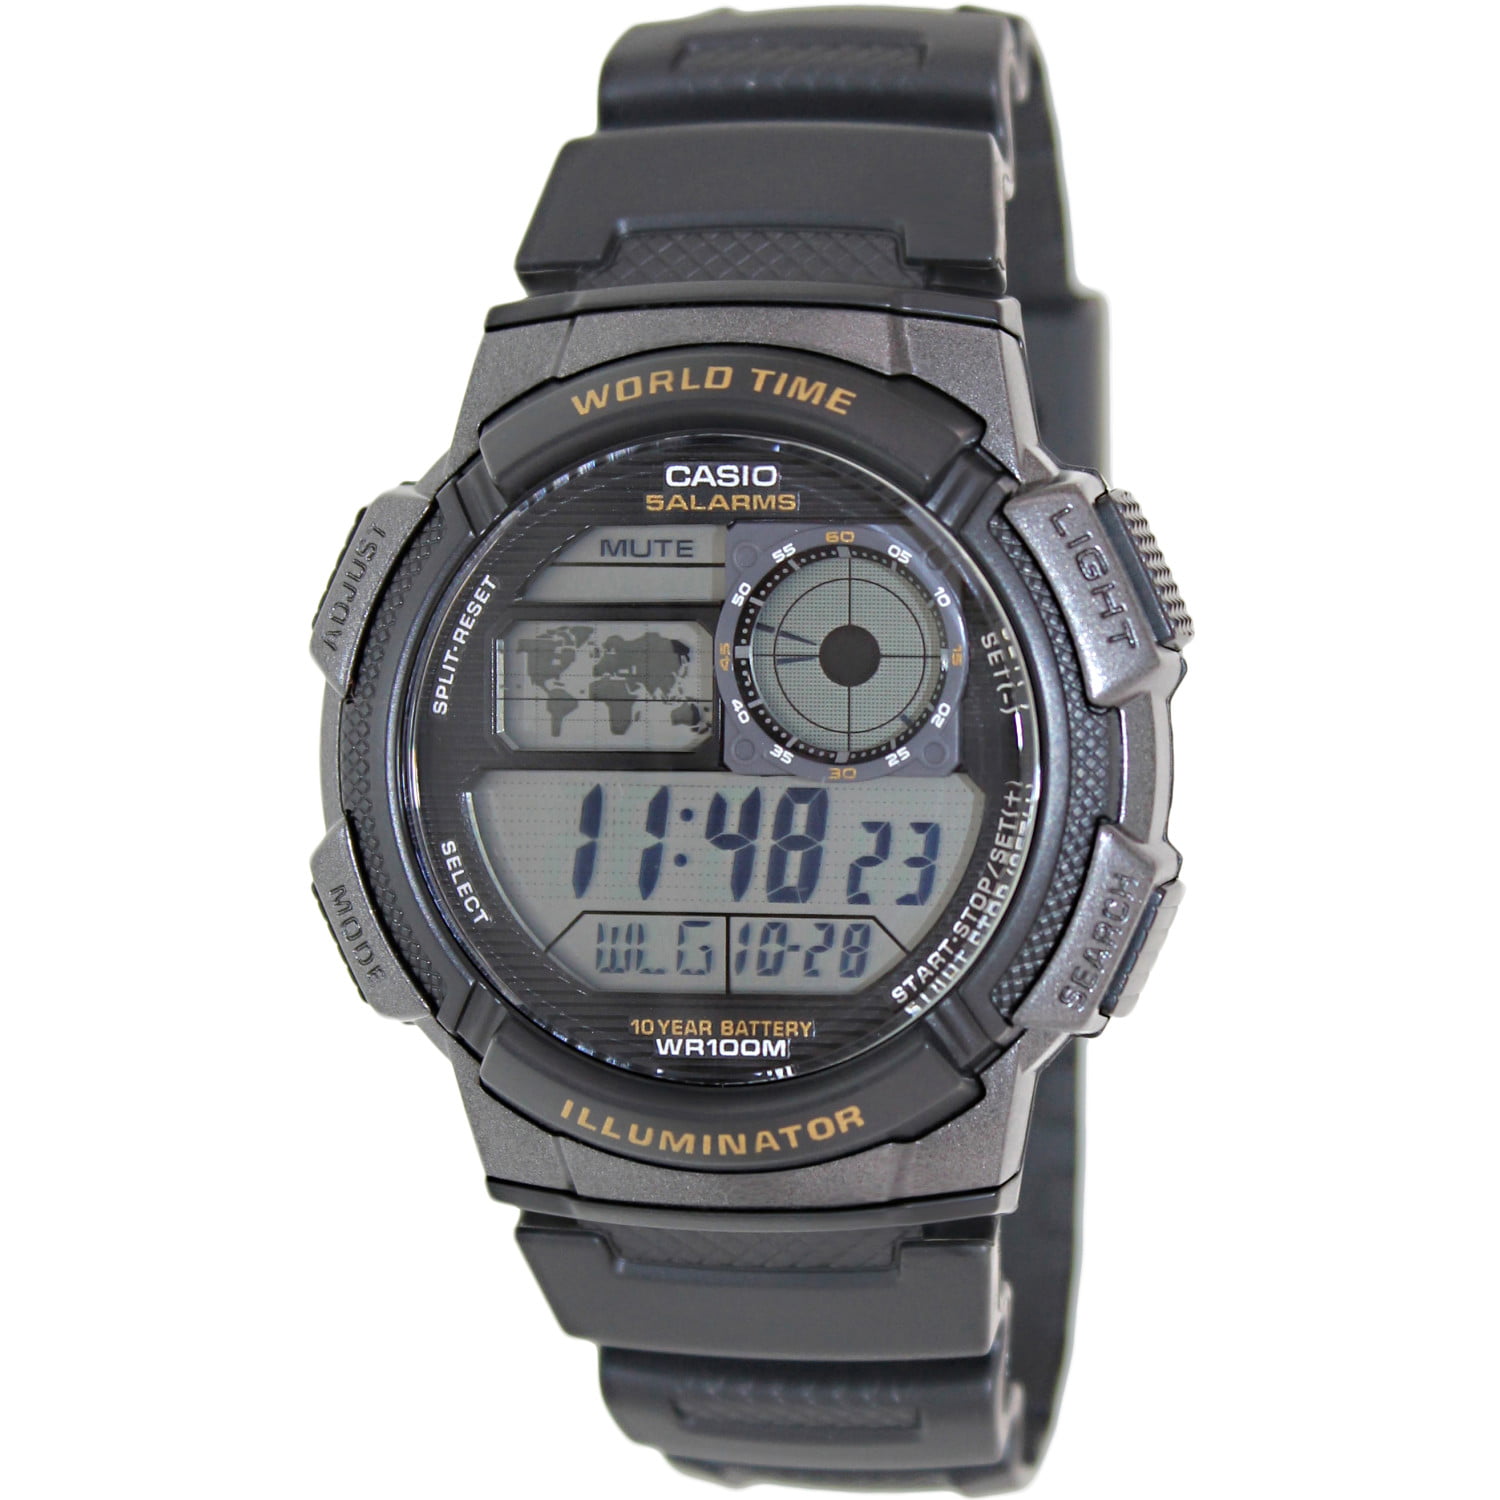 Casio Men's Time Digital Sport Watch, Black AE1000W-1AV - Walmart.com